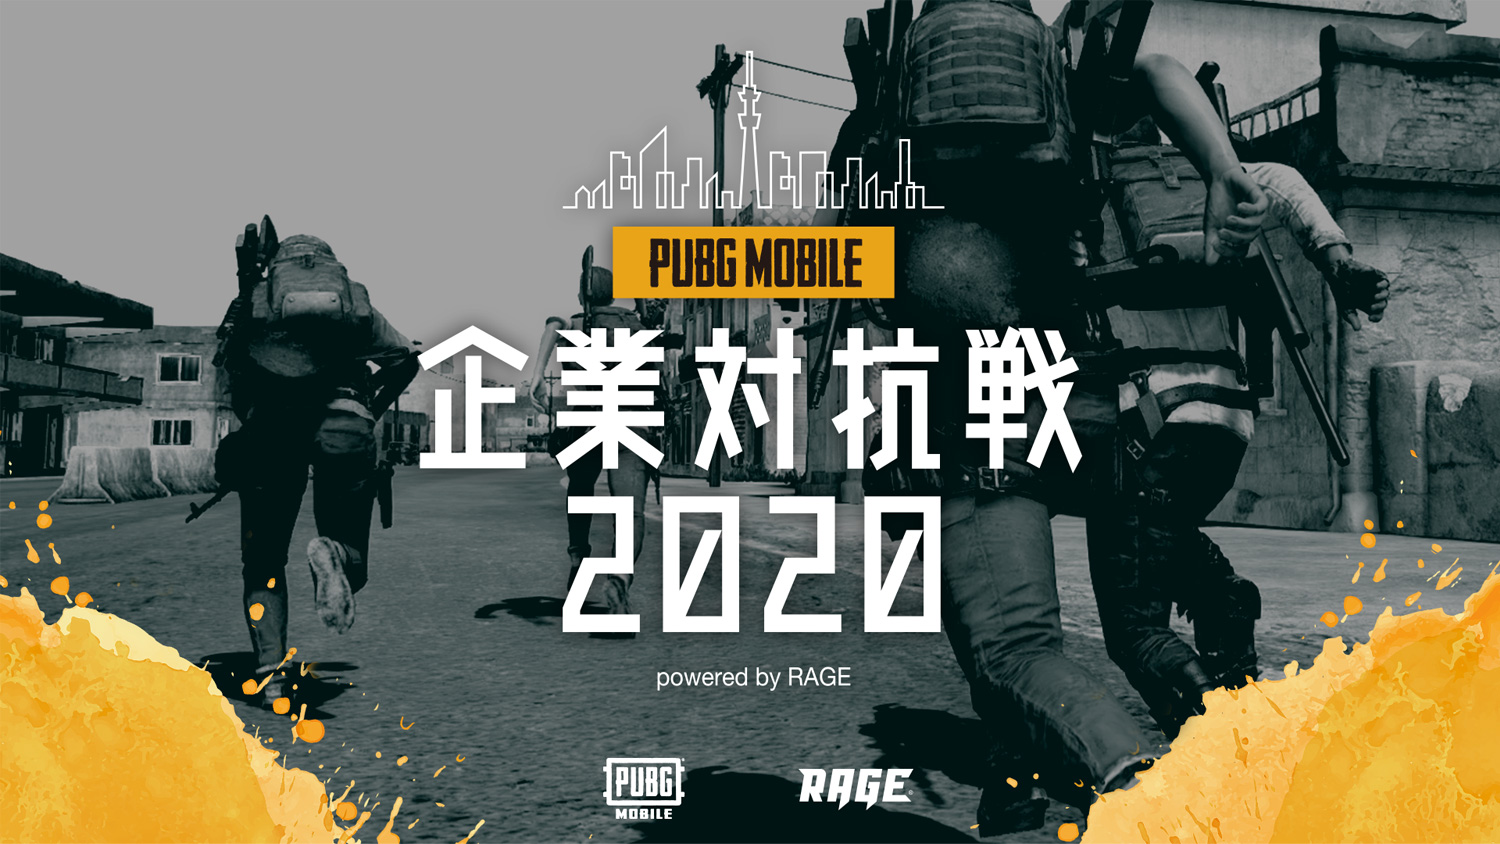 PUBG MOBILE 企業対抗戦 2020 powered by RAGE PUBG MOBILE RAGE